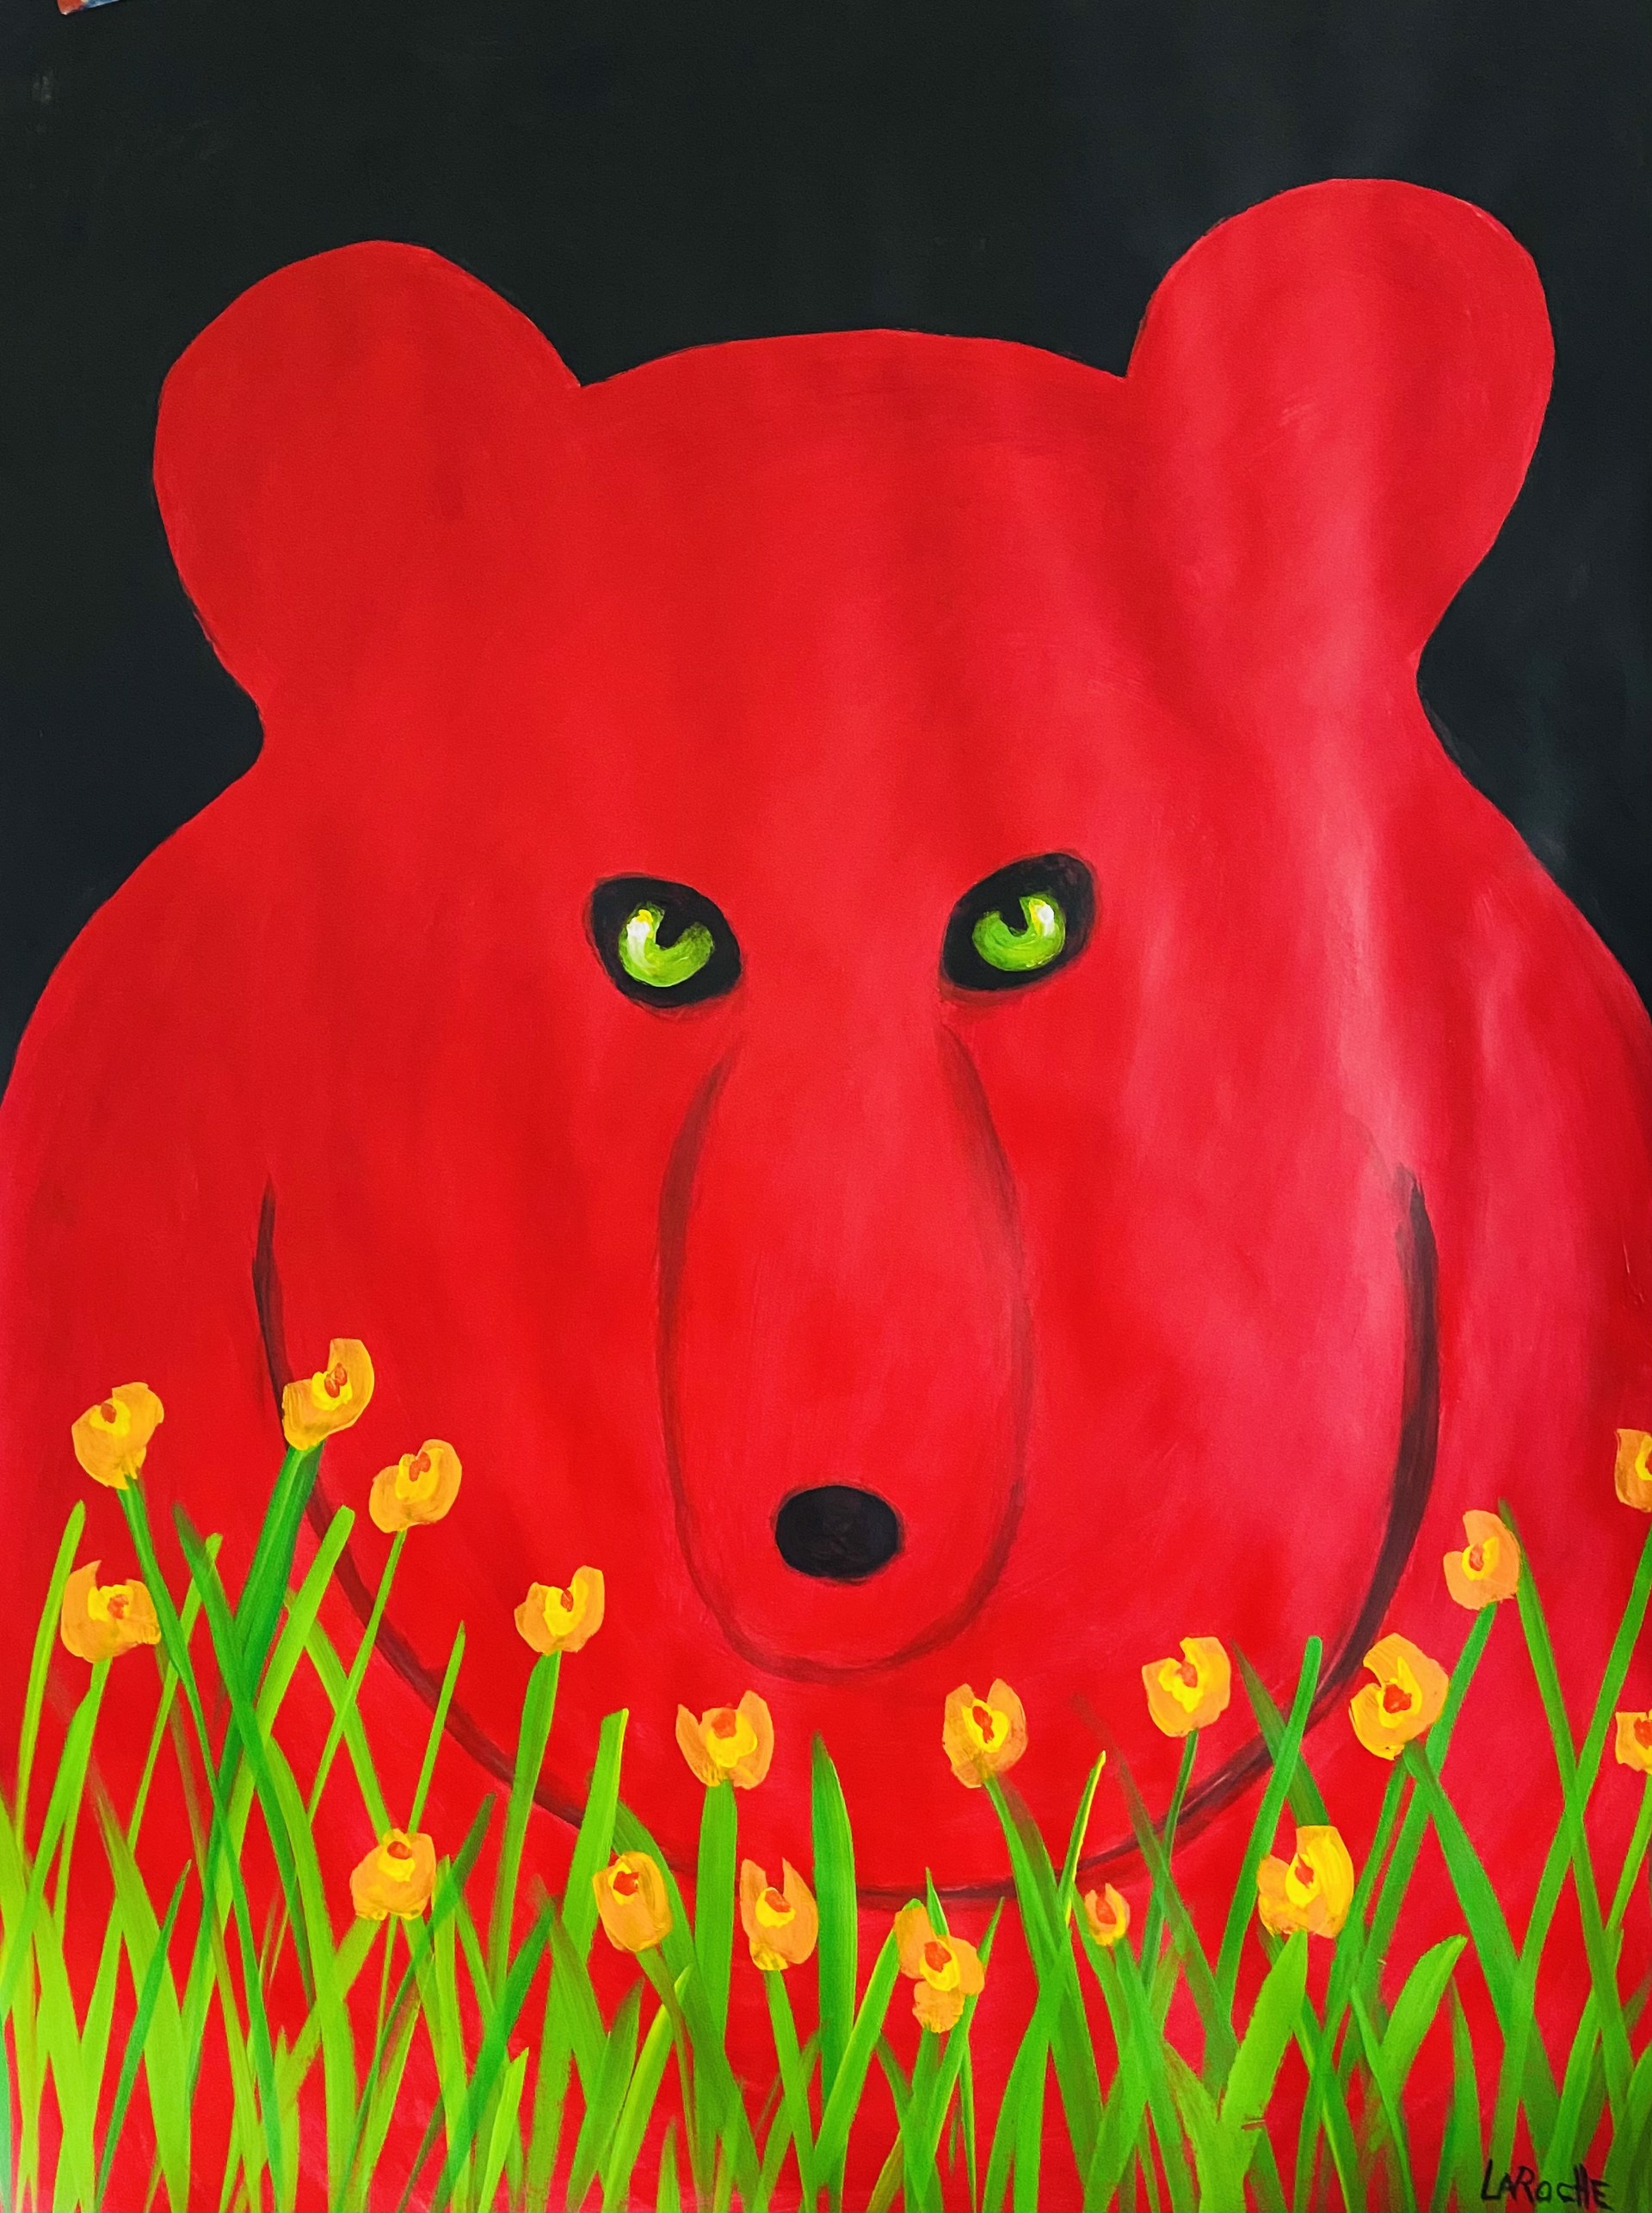 In the Garden: Big Red Bear by Carole LaRoche